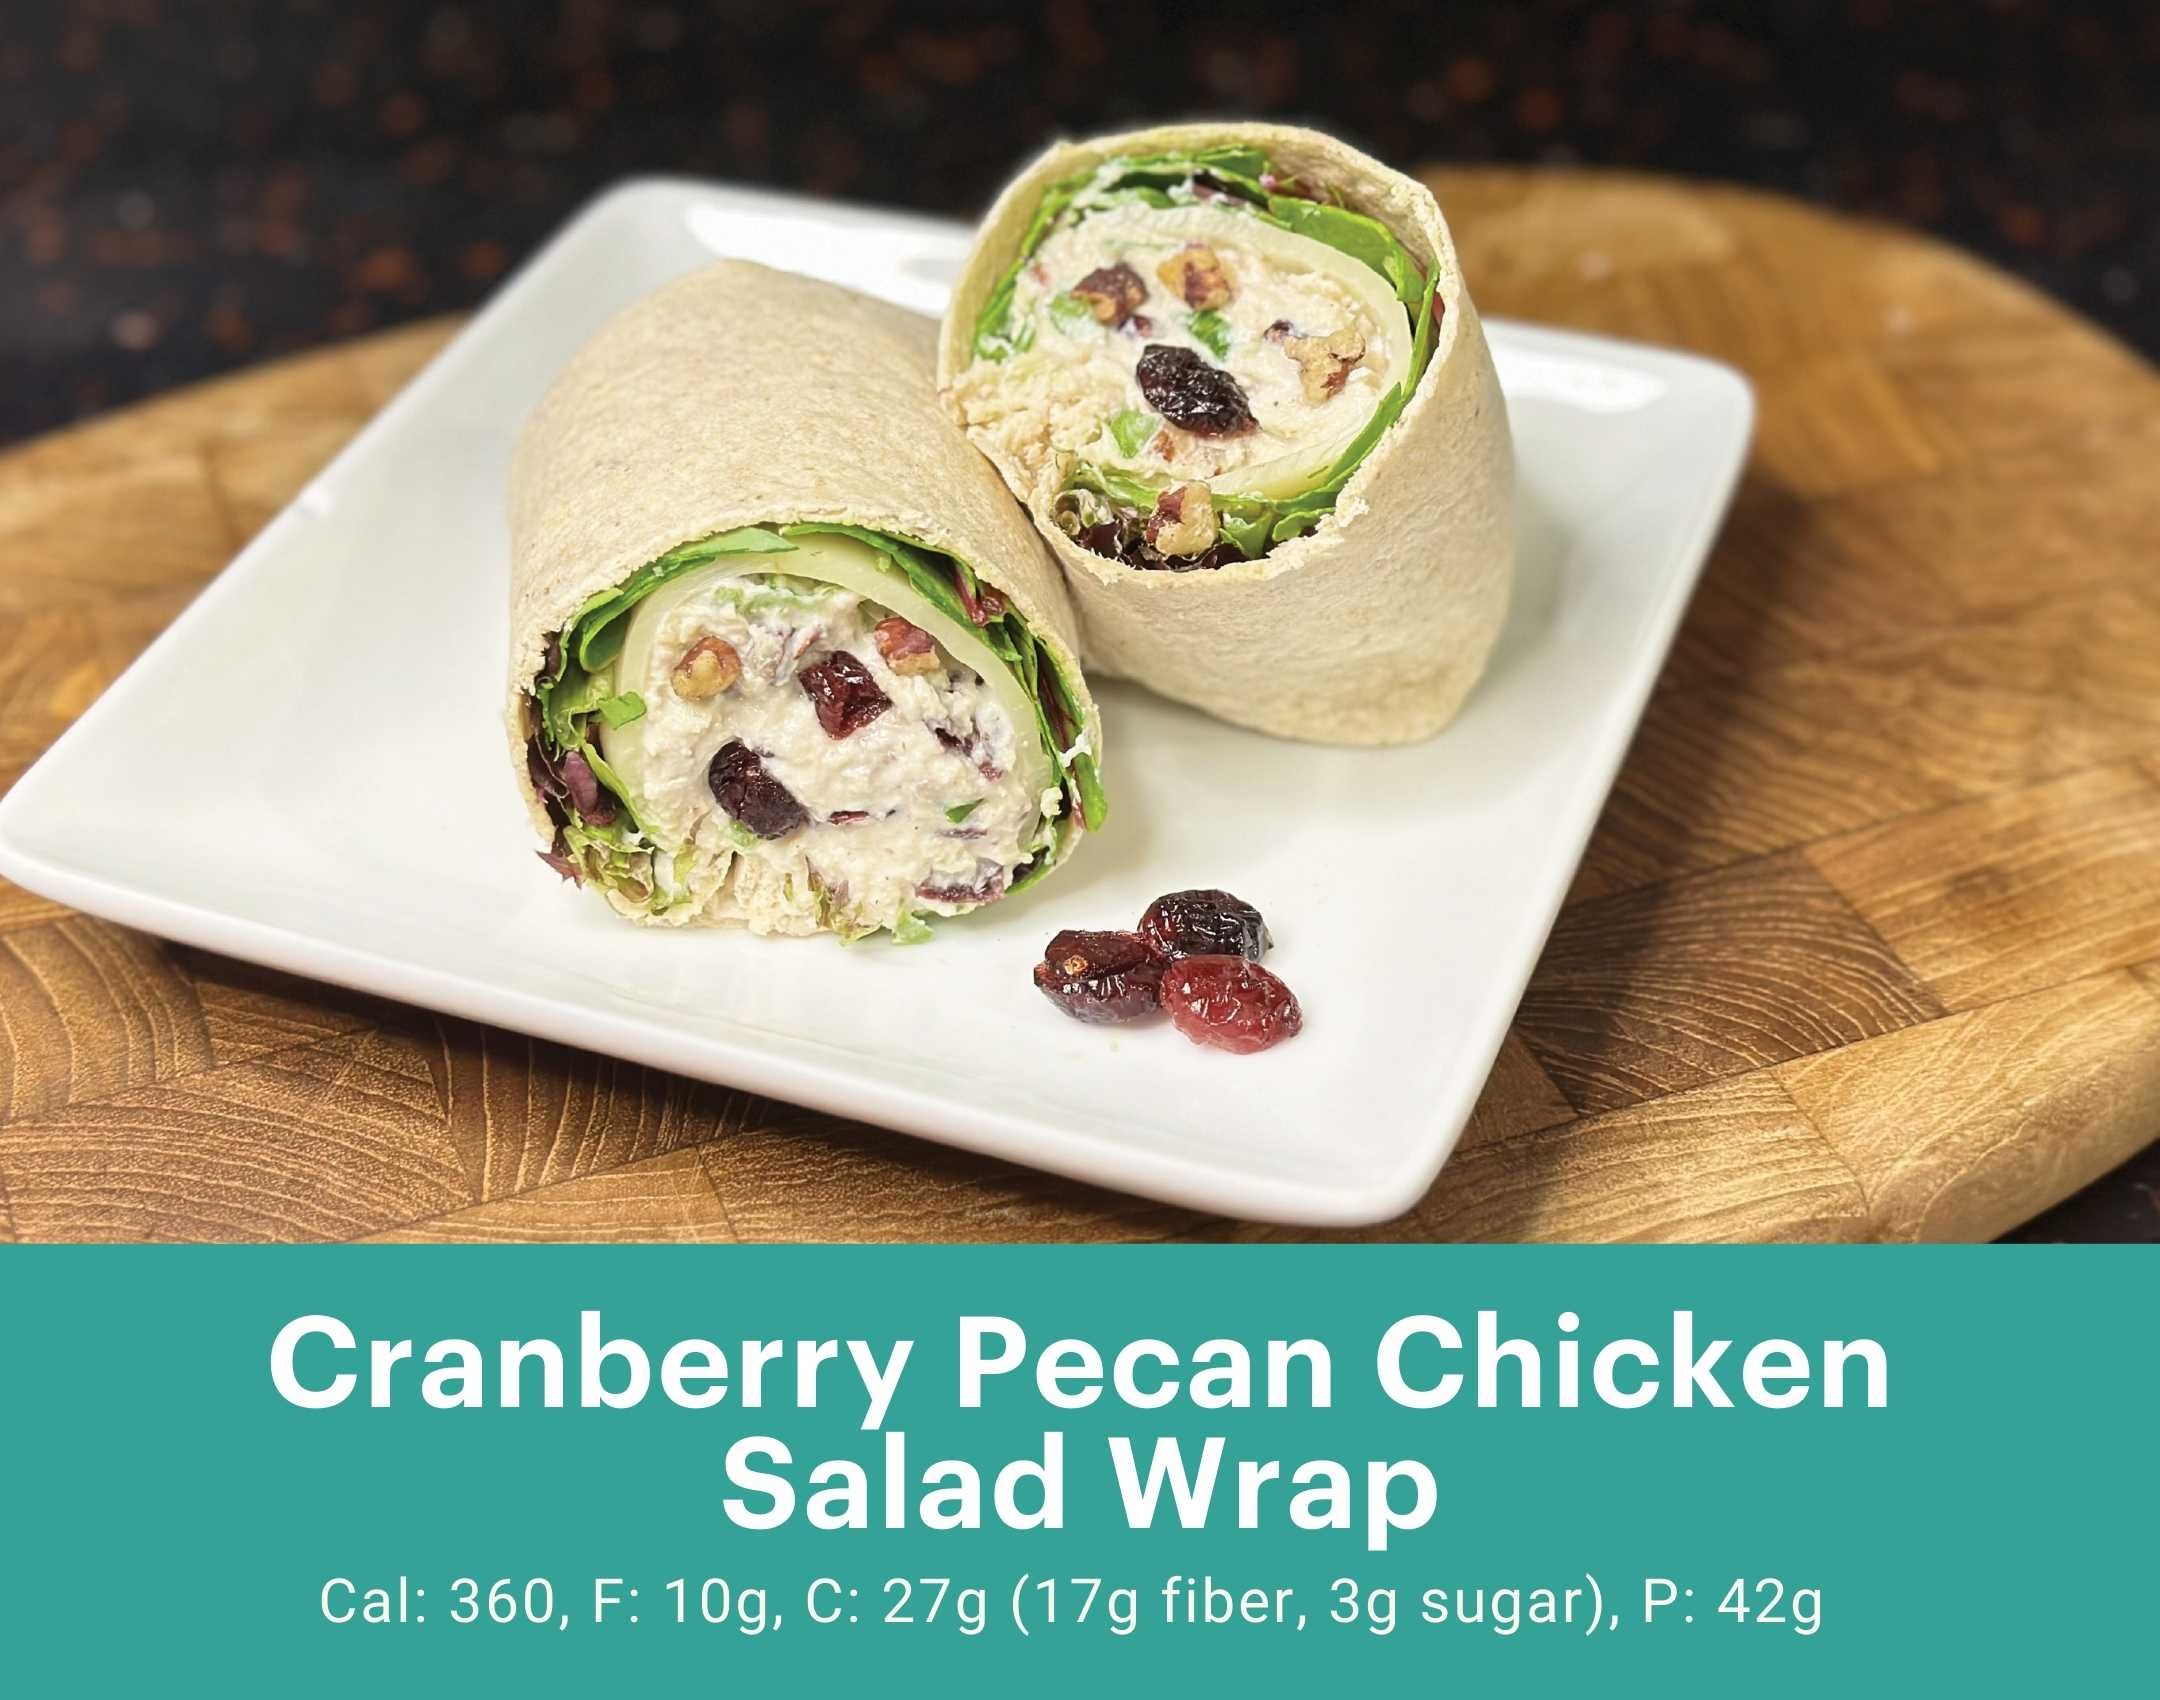 Cranberry Pecan Chicken Salad Wrap.jpg